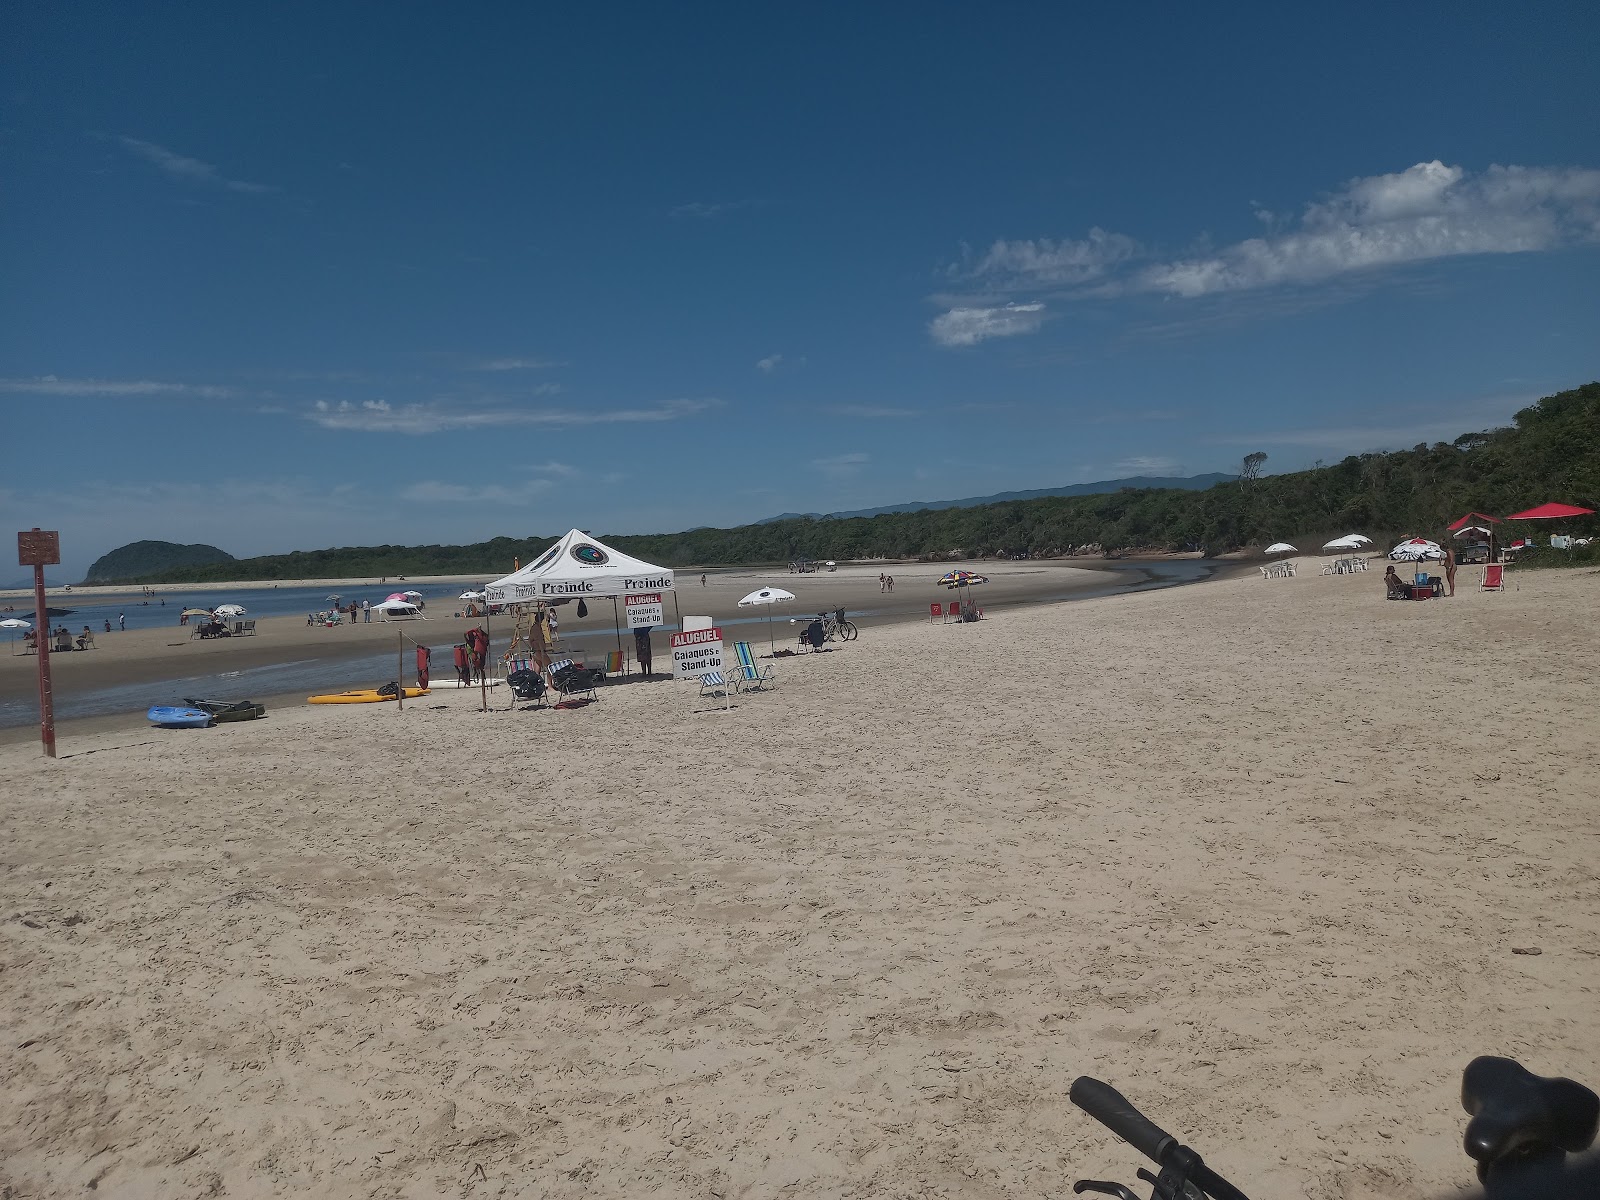 Fotografie cu Plaża Rio Itaguare cu golful spațios